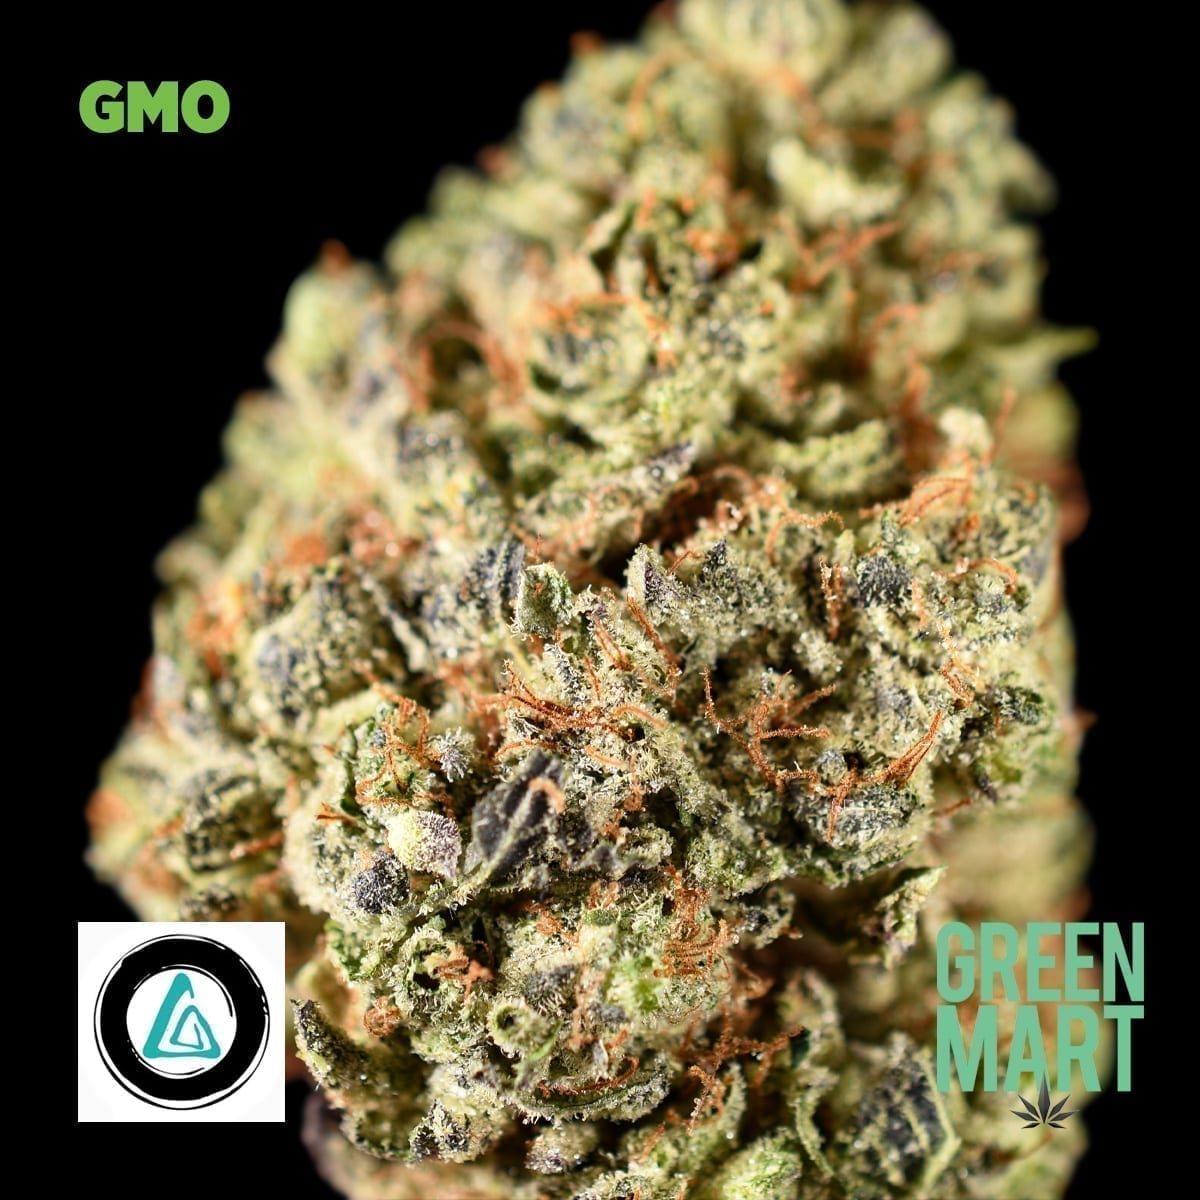 GMO by Alibi Cannabis